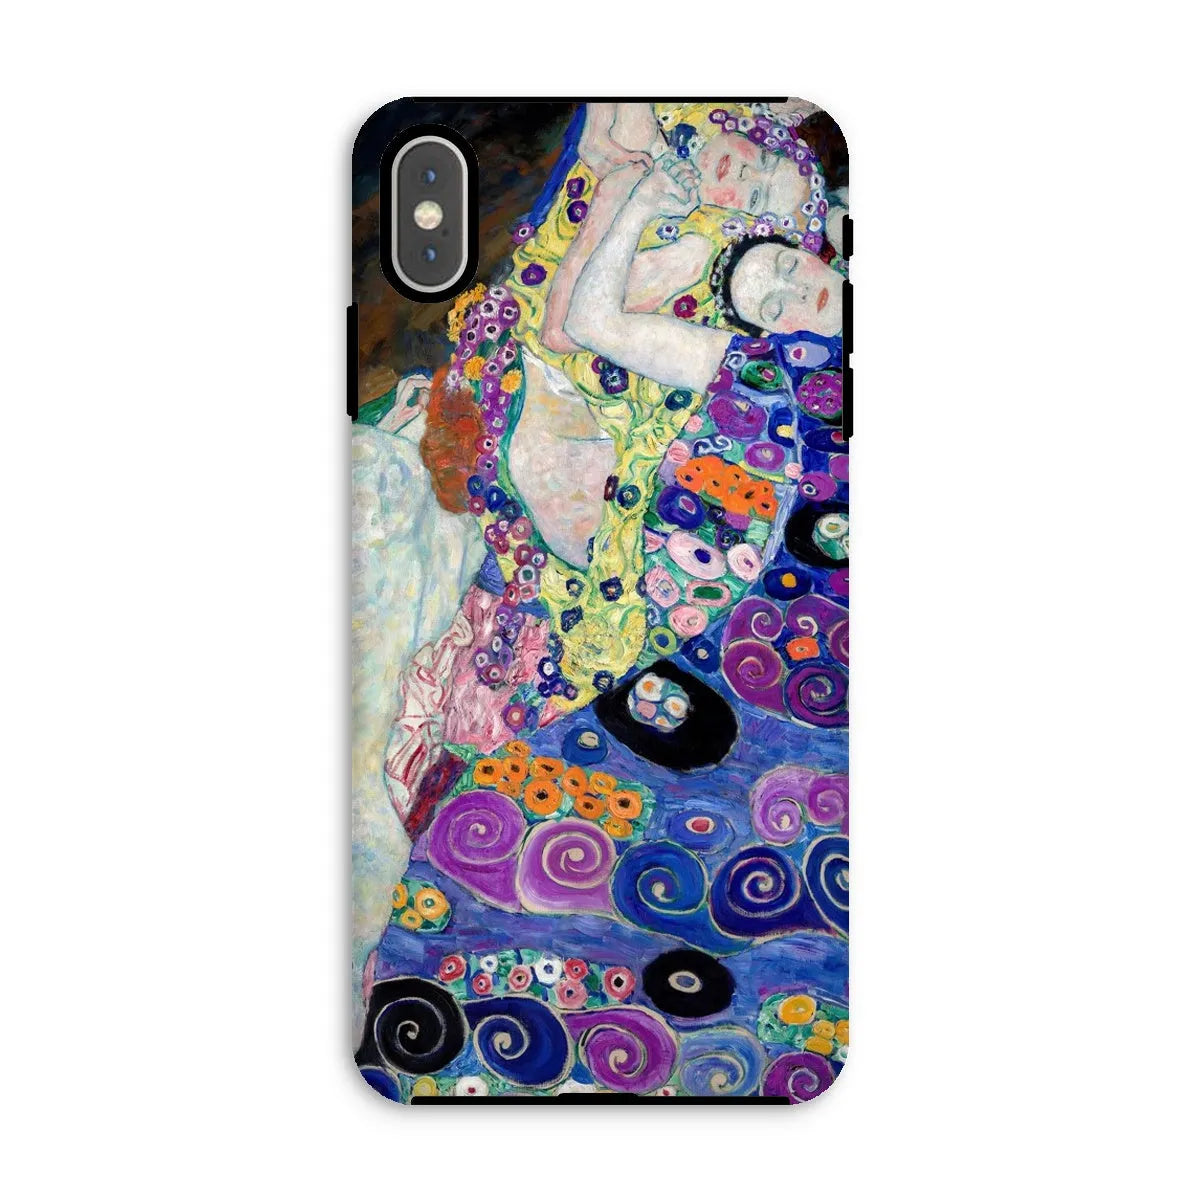 The Virgin - Vienna Secession Phone Case - Gustav Klimt - Iphone Xs Max / Matte - Mobile Phone Cases - Aesthetic Art